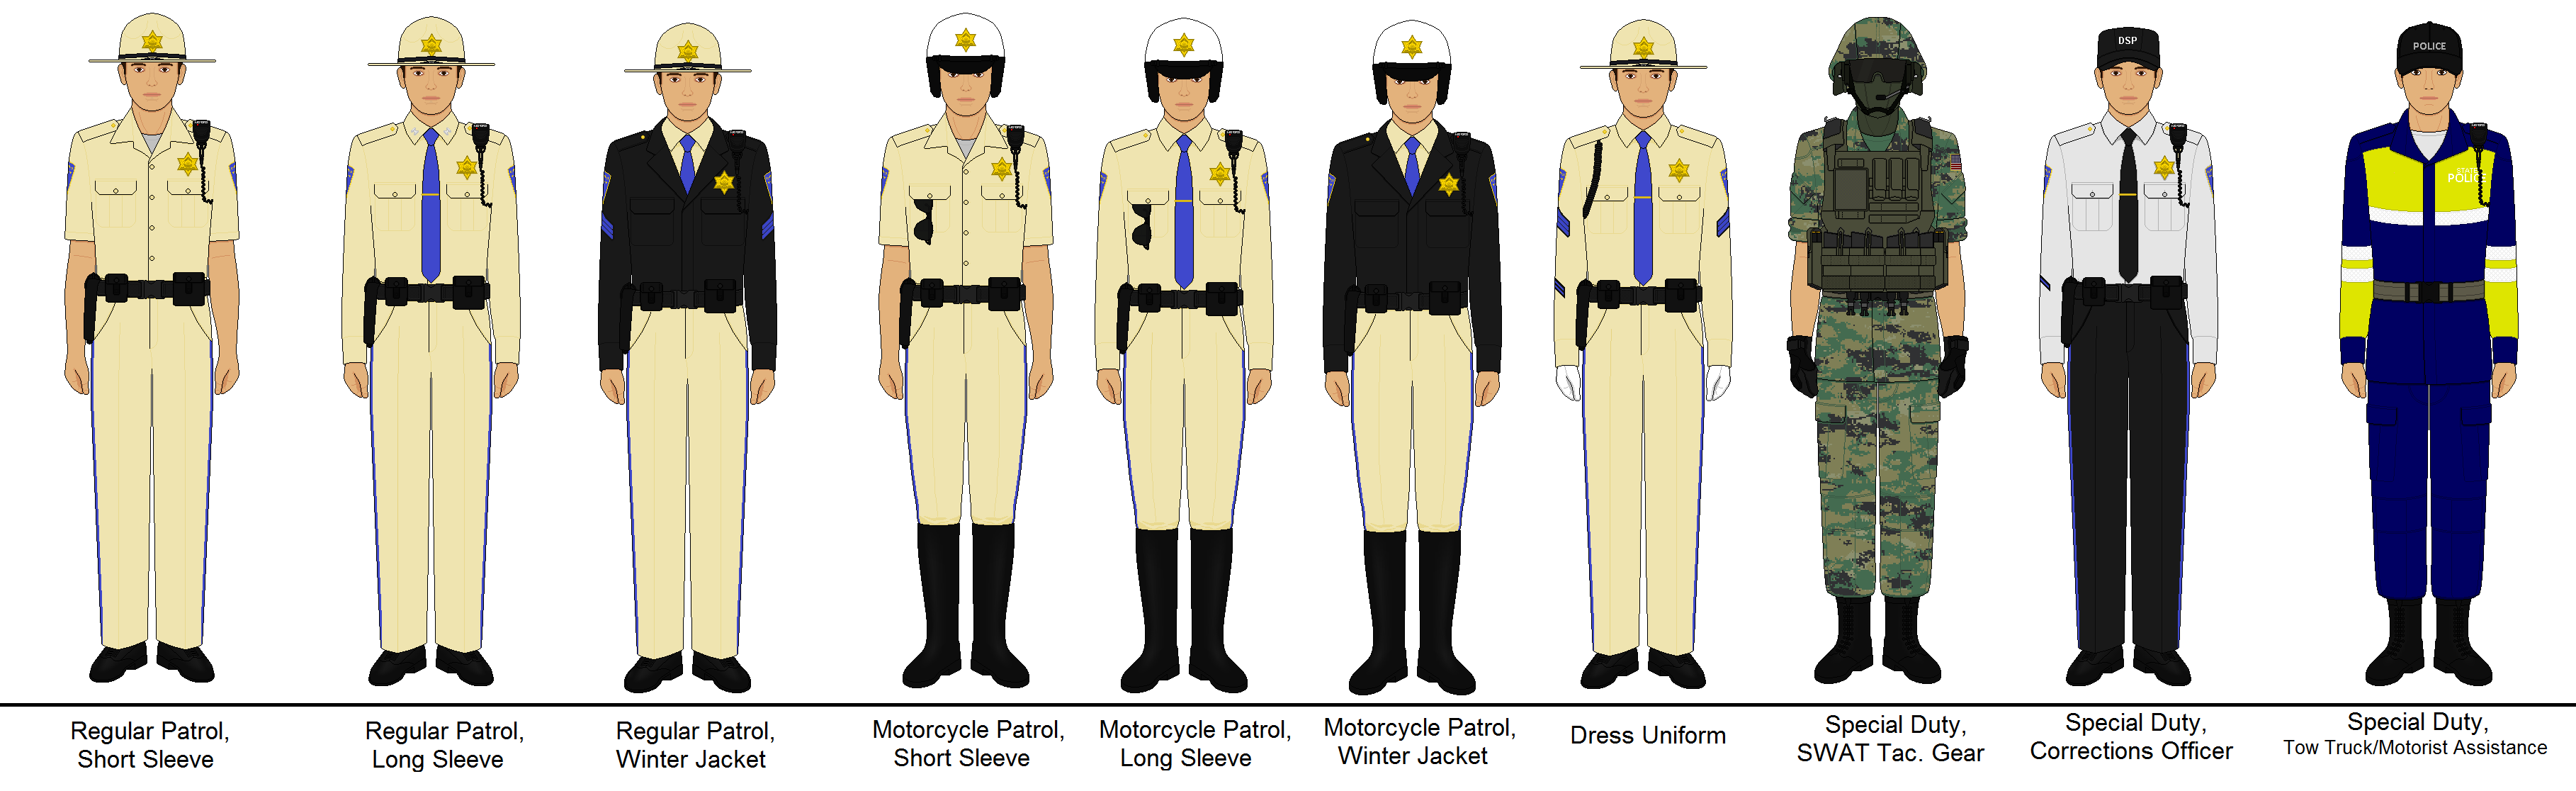 Police uniforms vs. military uniforms